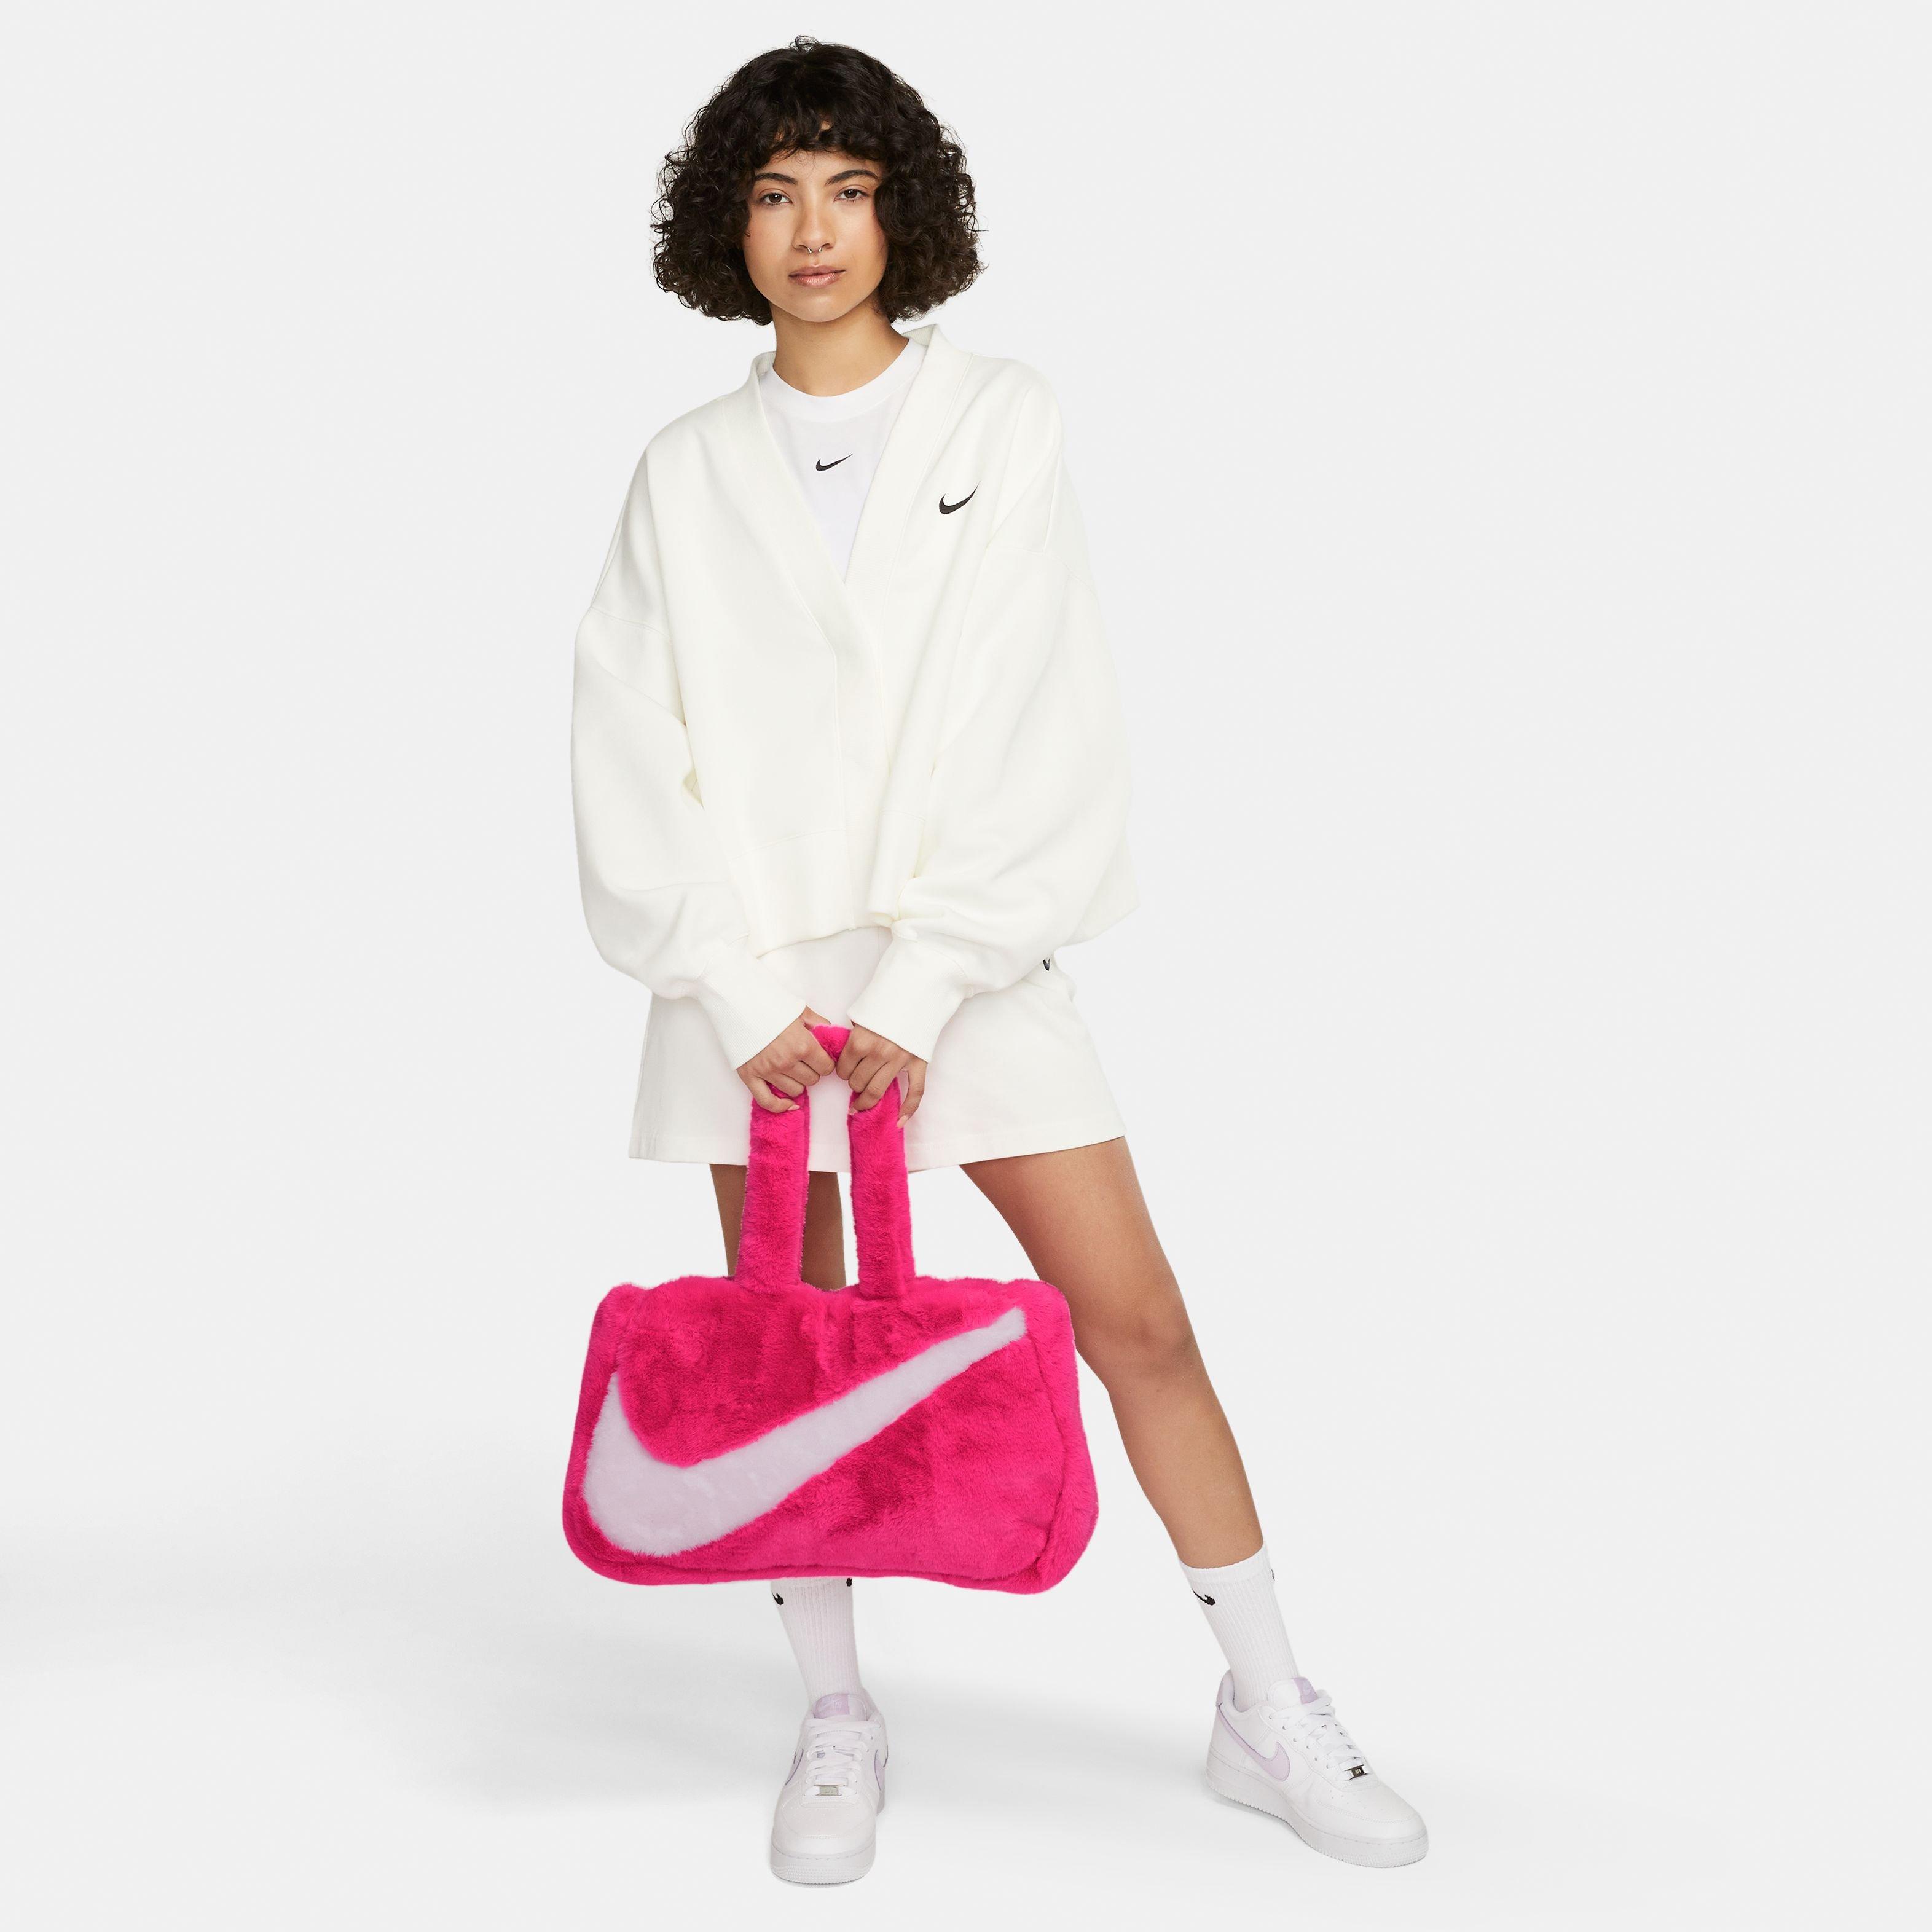 Nike Canvas Tote Bag / Gym Bag / Purse